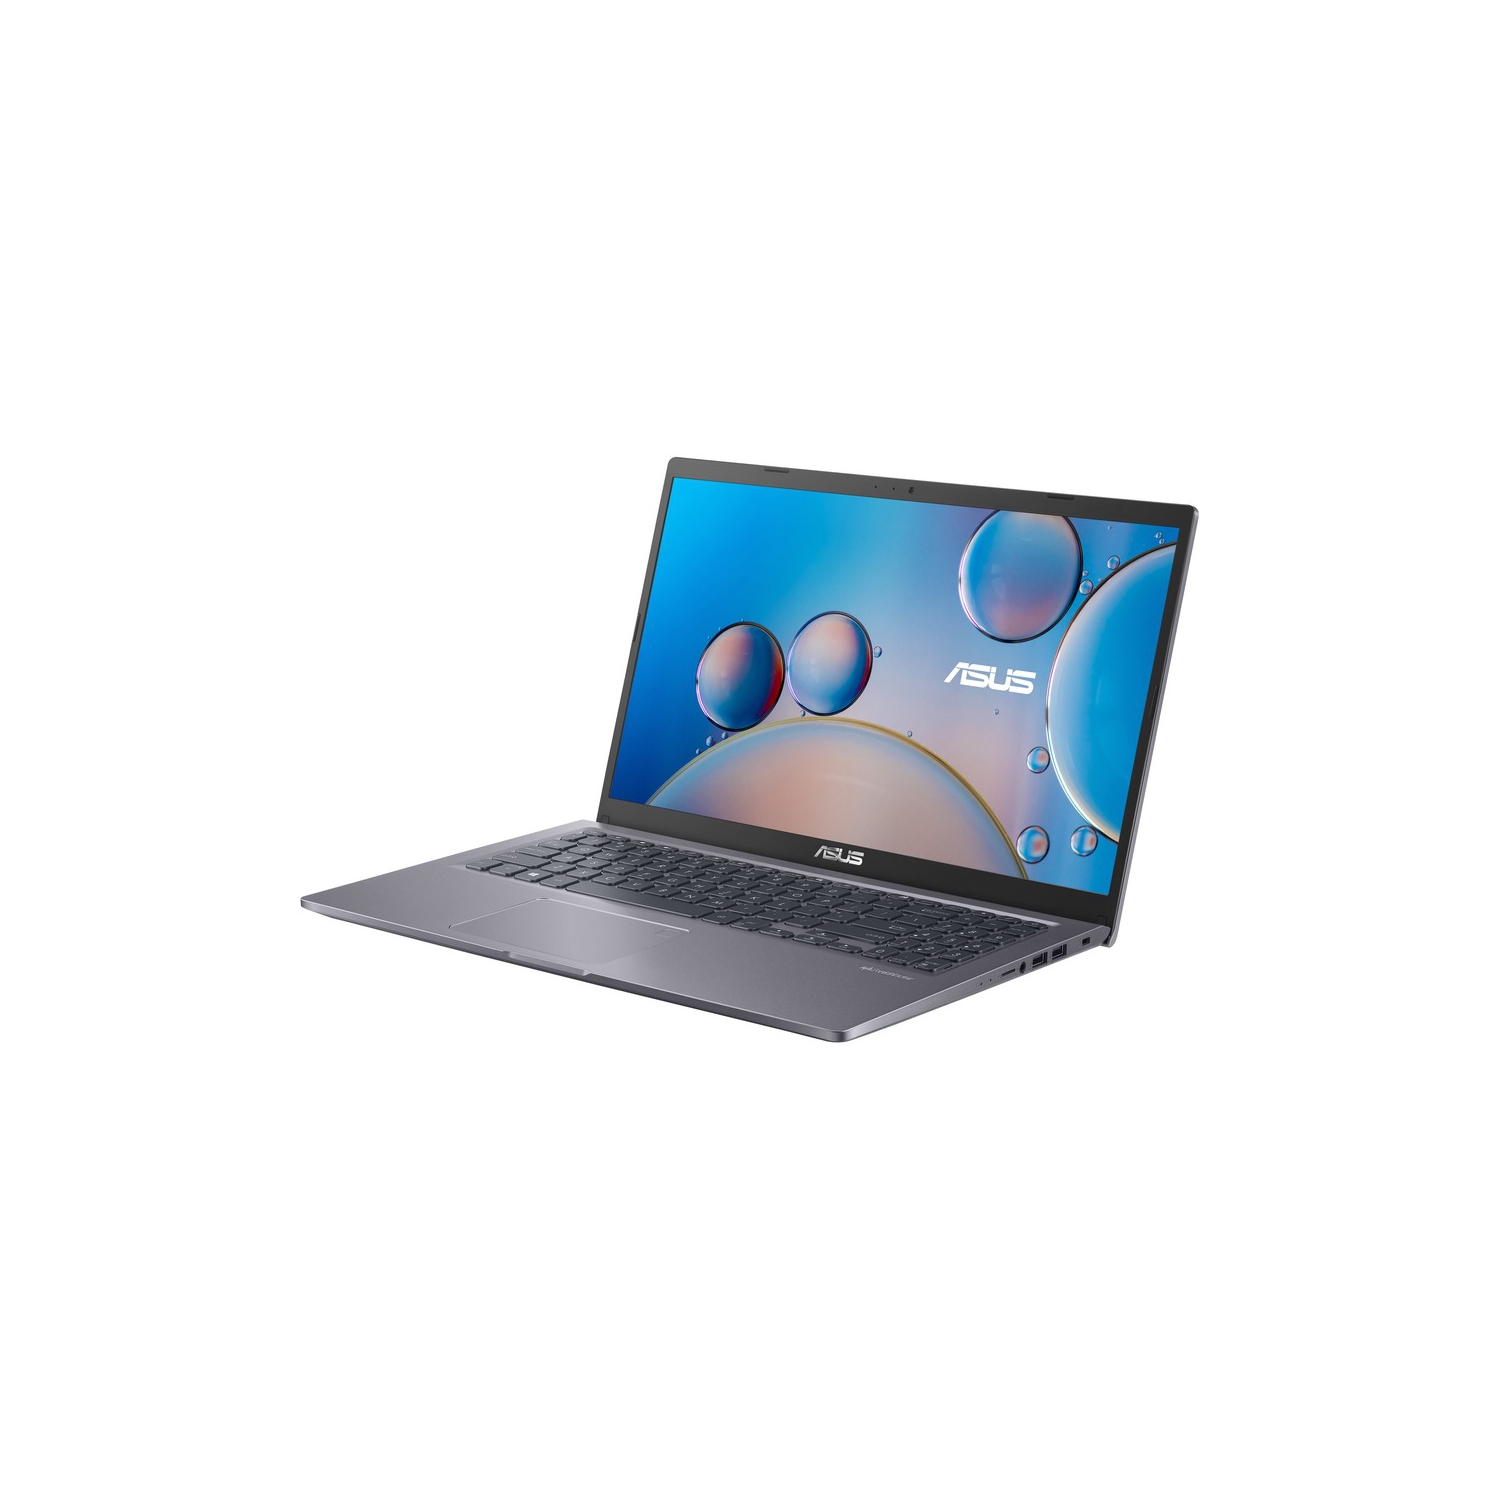 ASUS VivoBook 15 X515 Thin and Light Laptop, 15.6” IPS FHD Display, Intel Core i7-1165G7 CPU, Intel Iris Xe graphics, 12GB DDR4 RAM, 512GB SSD, Fingerprint Reader, X515EA-DS79-CA